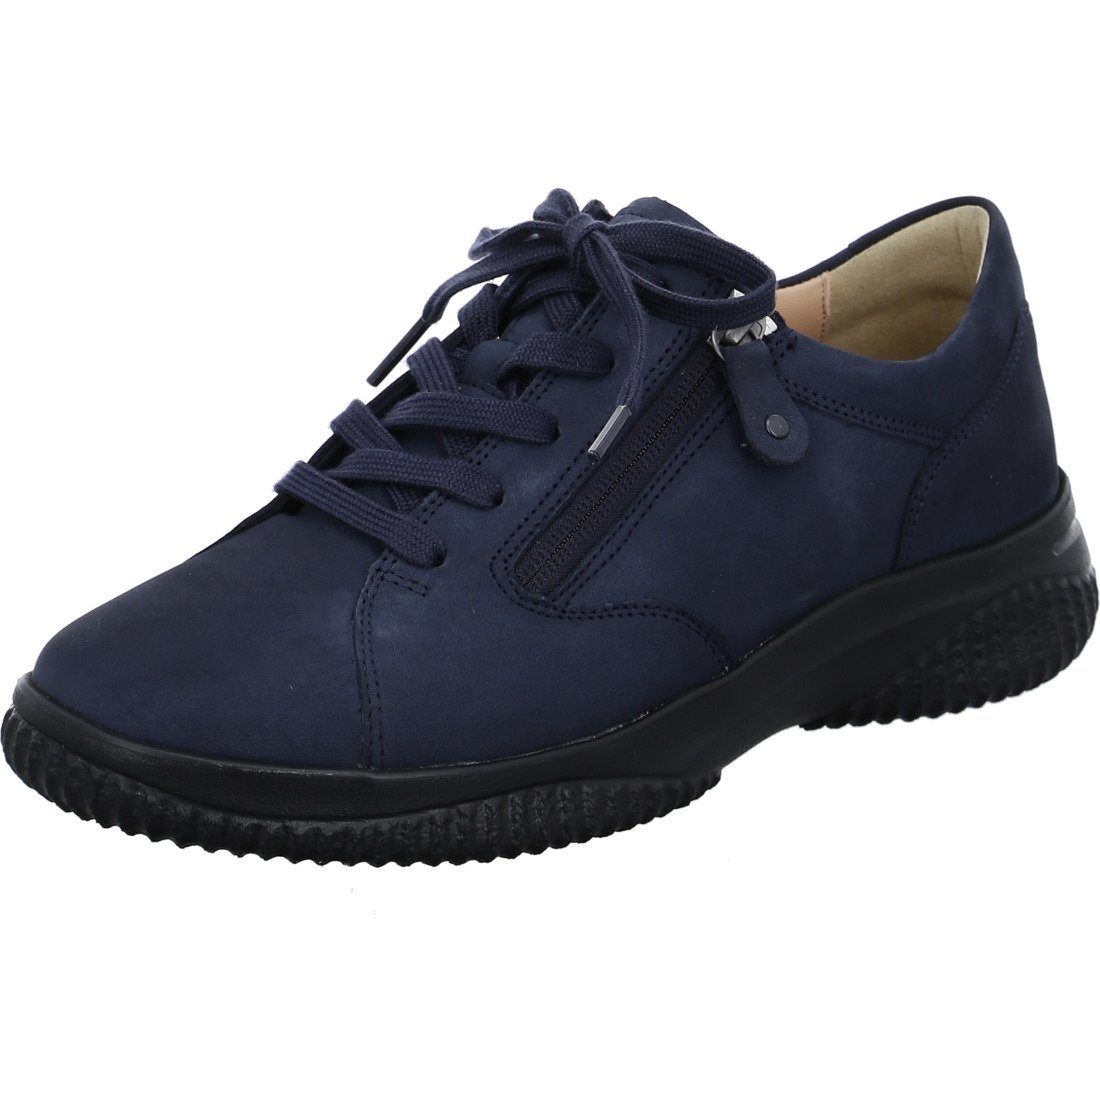 Hartjes Hartjes Schuhe, Schnürschuh Ethno - Nubuk Damen Schnürschuh blau 047505